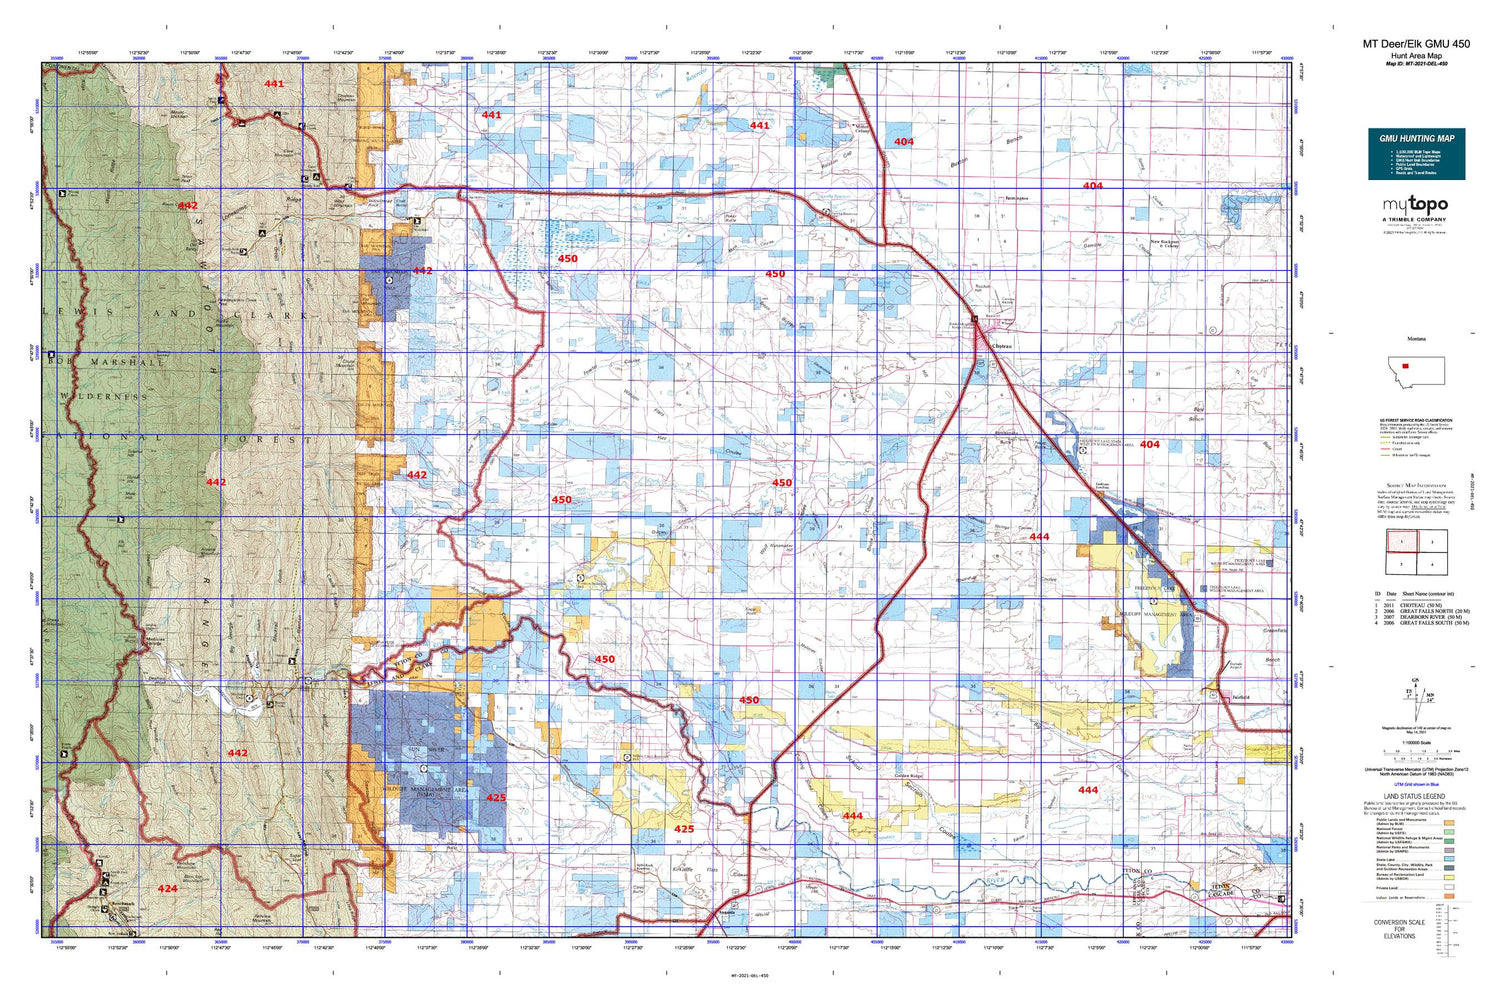 Montana Deer/Elk GMU 450 Map Image